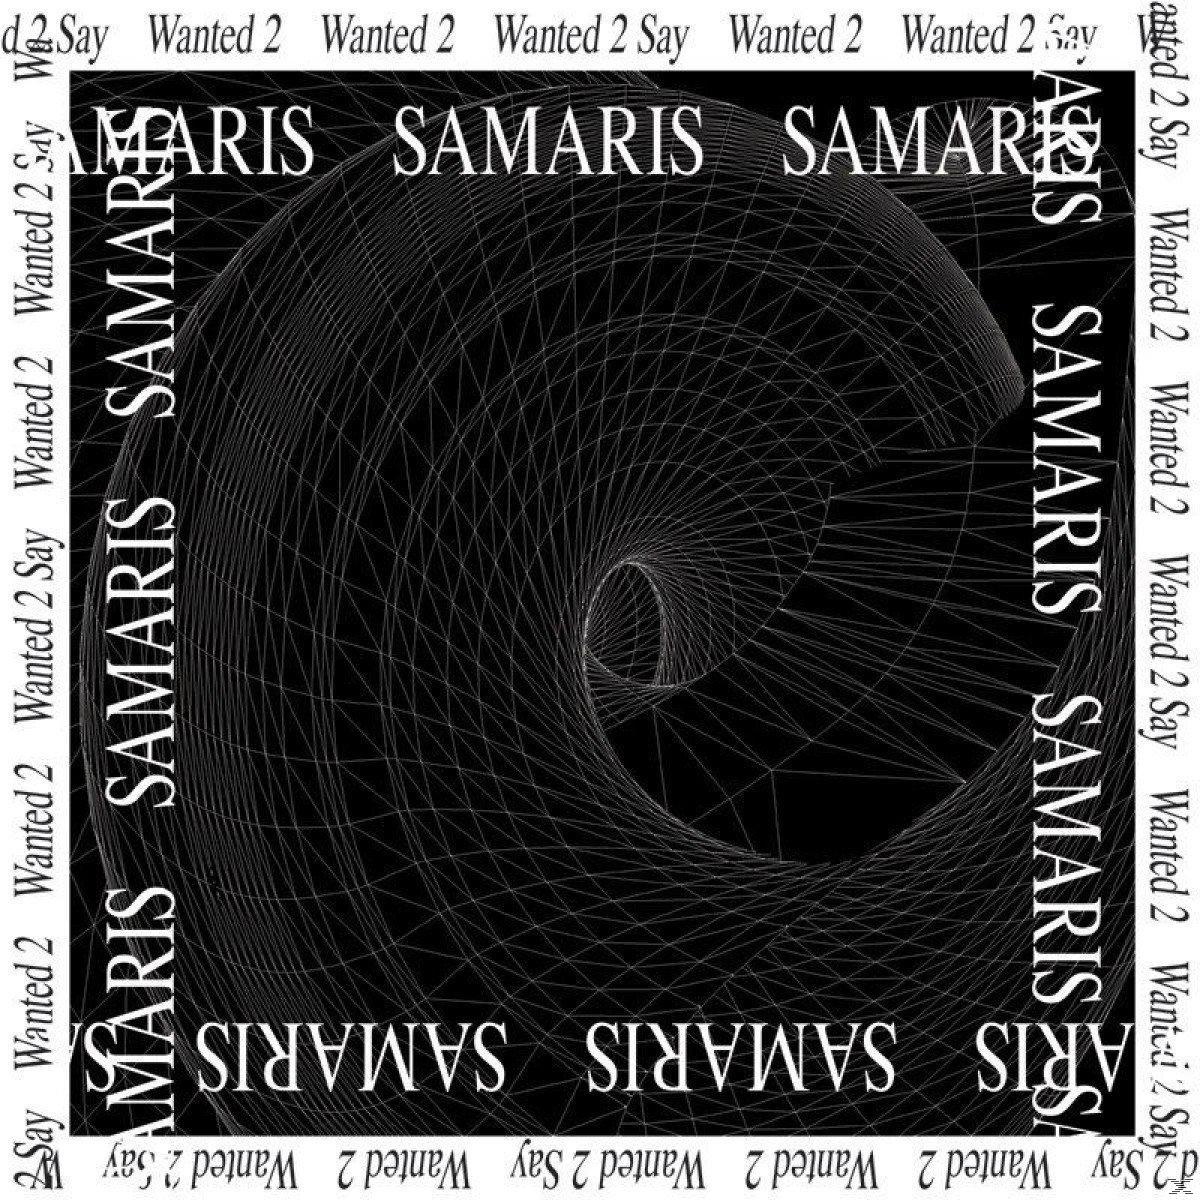 Say Wanted - 2 (Vinyl) - Samaris